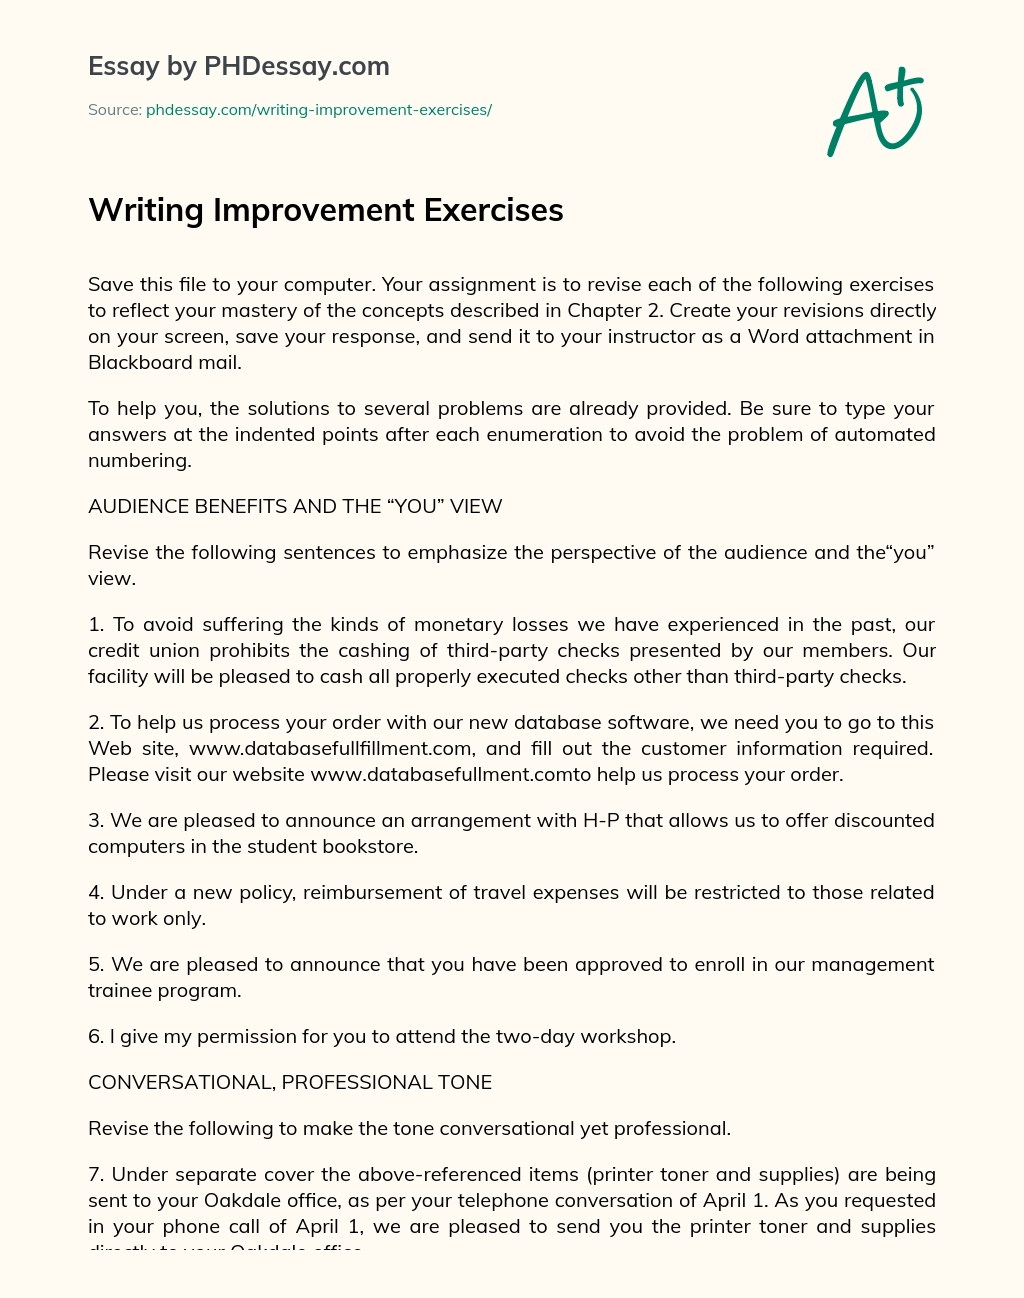 Writing Improvement Exercises essay